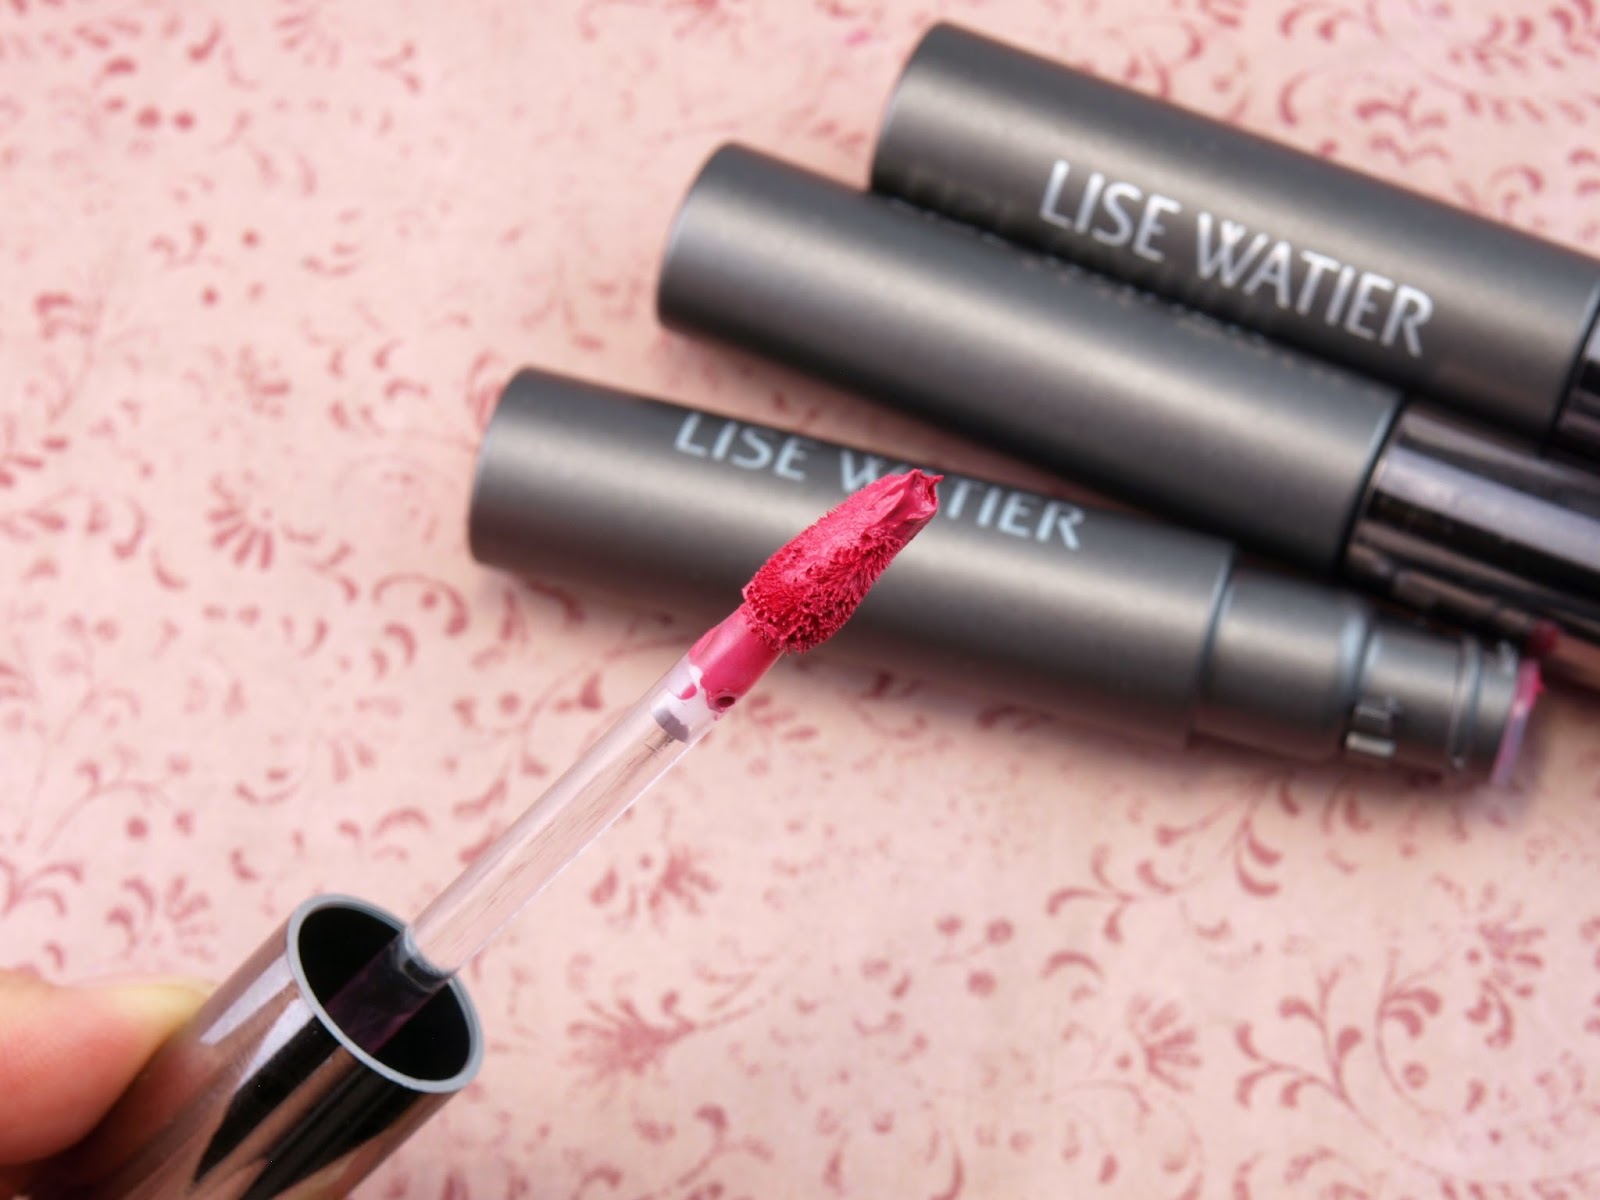 Lise Watier Baiser Velours Liquid Lipsticks: Review and Swatches